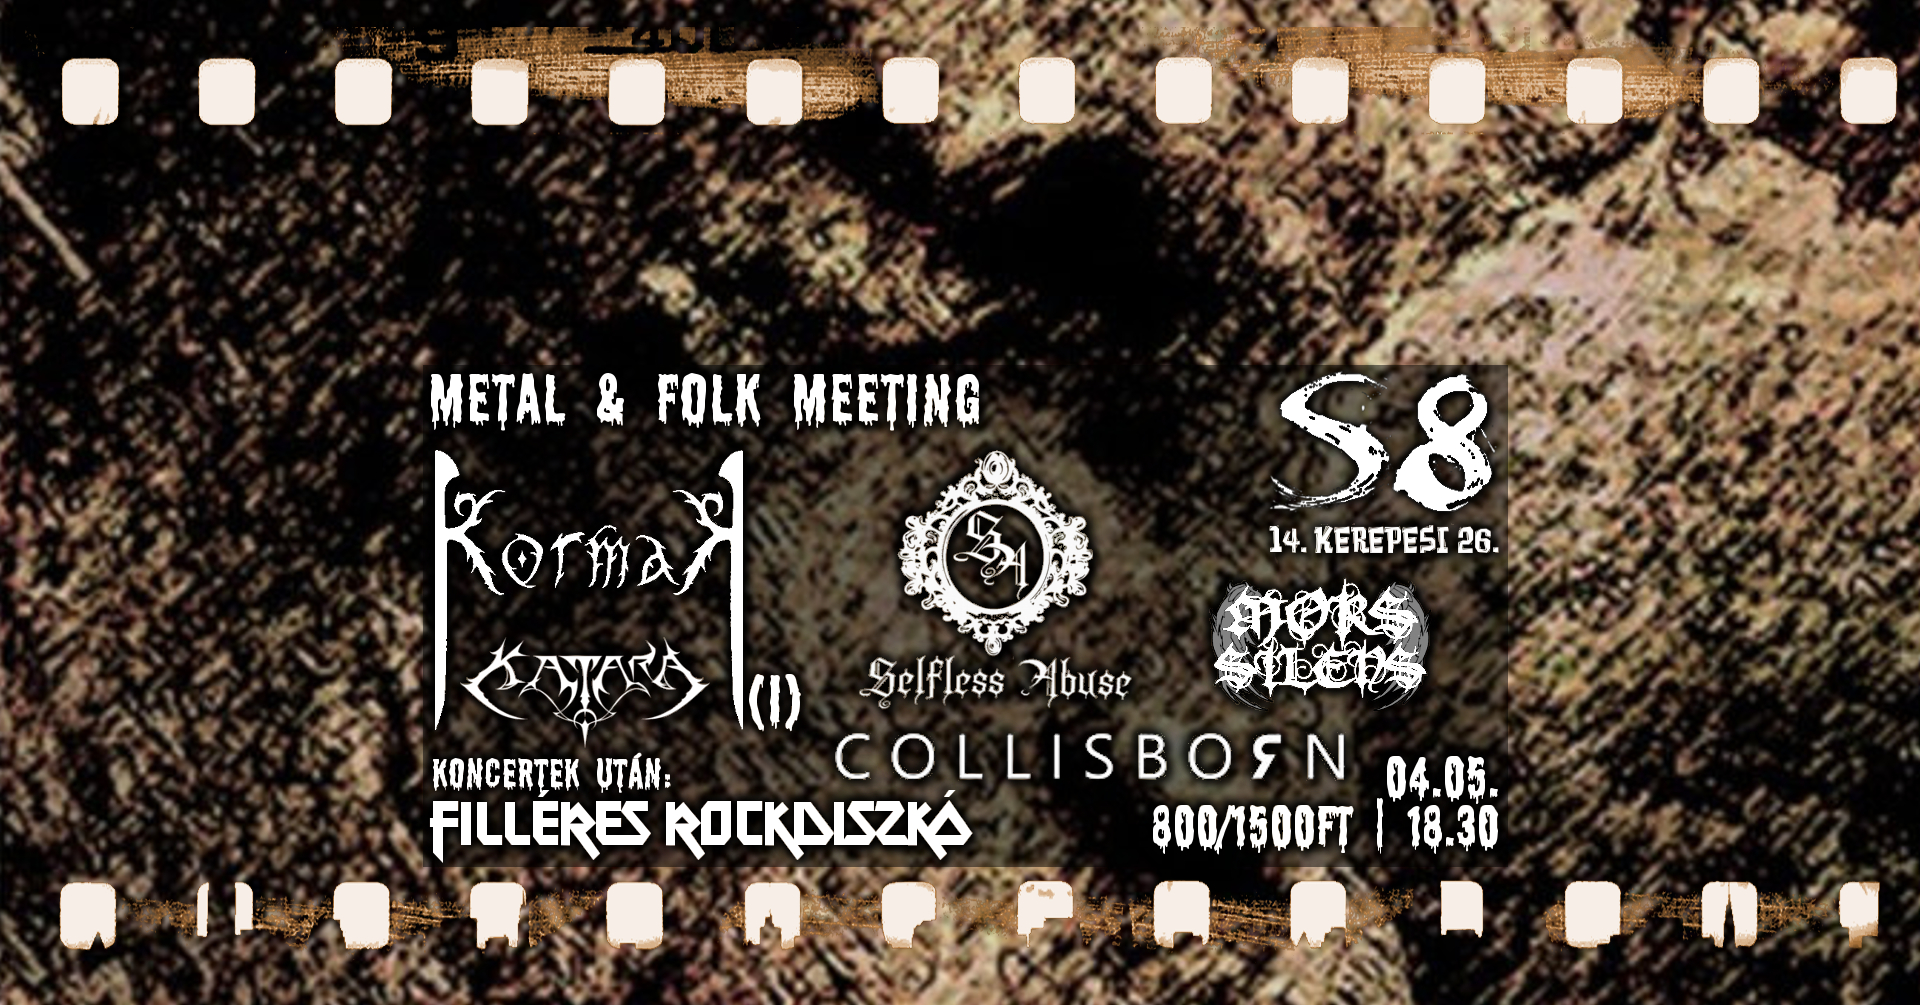 Metal & Folk Meeting - KormaK [I] I Mors Silens I Selfless Abuse I Collisborn I Katara [ARAD]